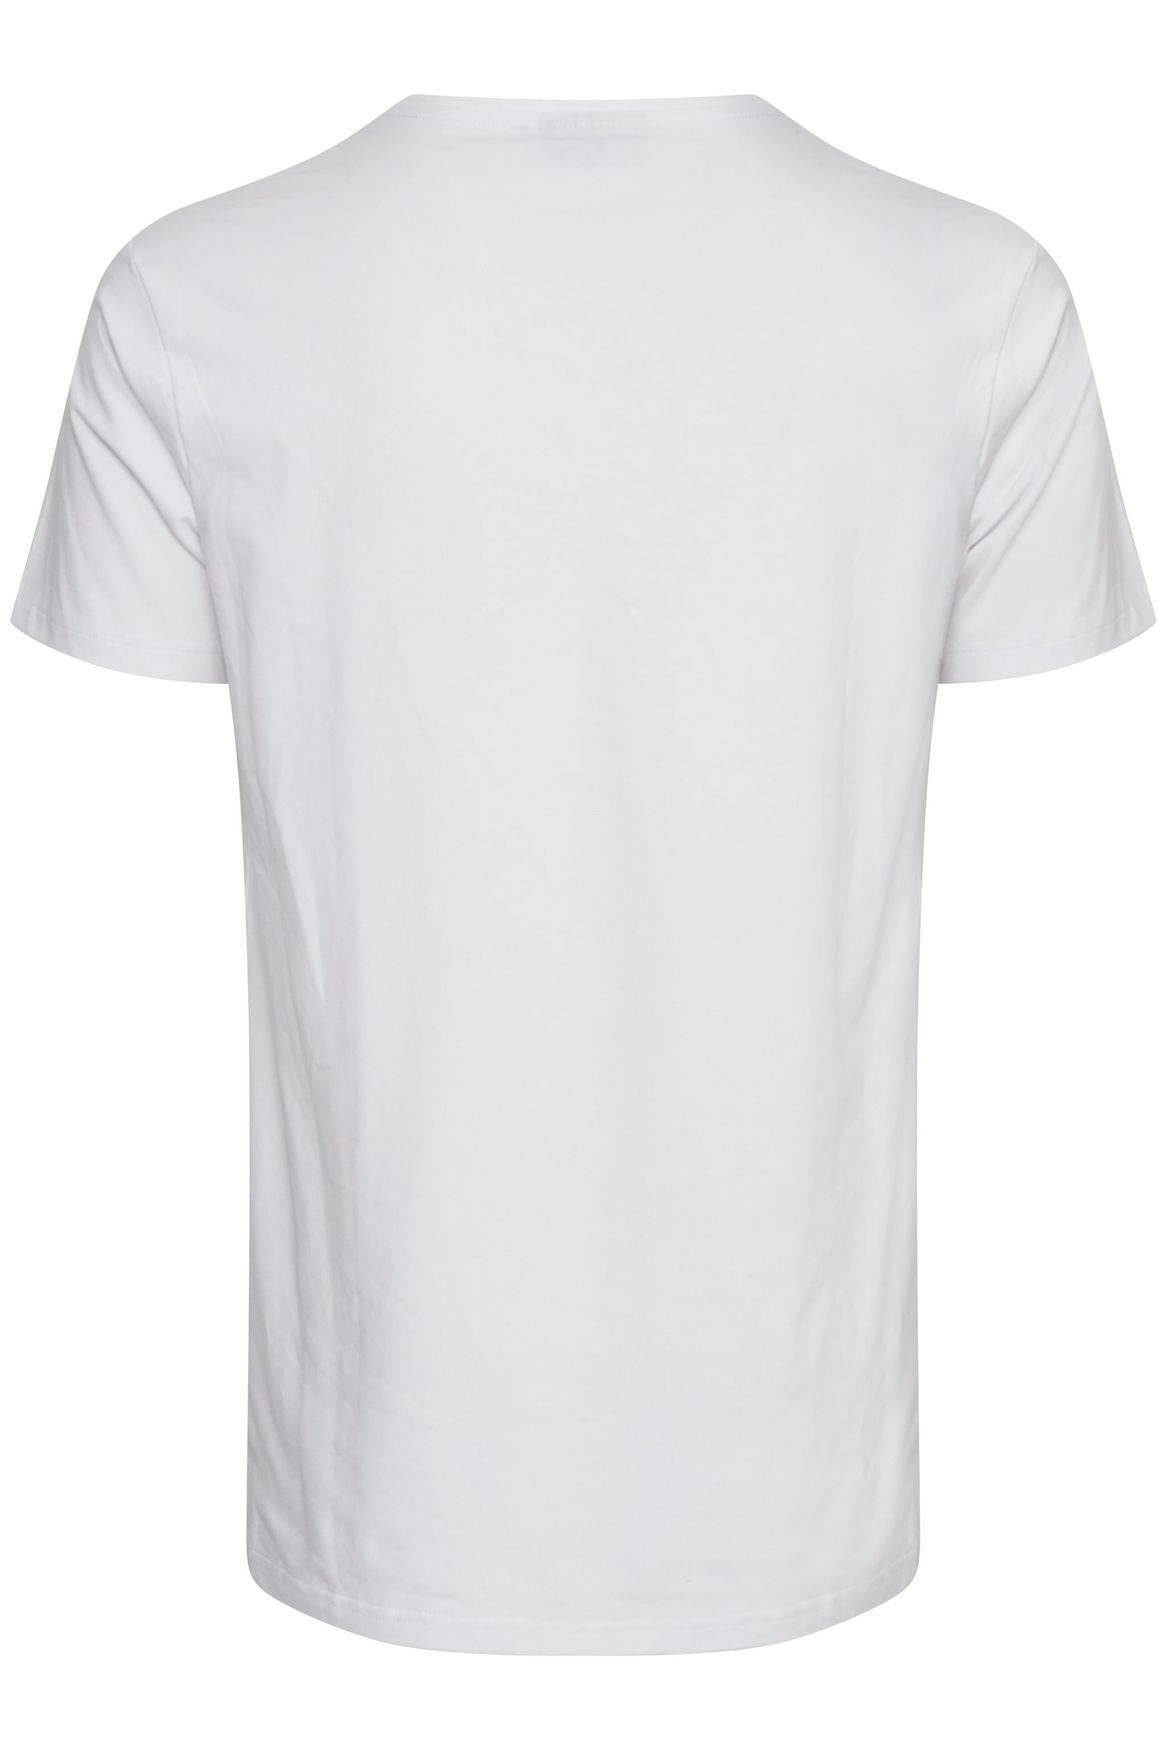 Casual Friday 4458 LINCOLN Kurzarm in Basic Weiß V-Ausschnitt Einfarbiges T-Shirt T-Shirt